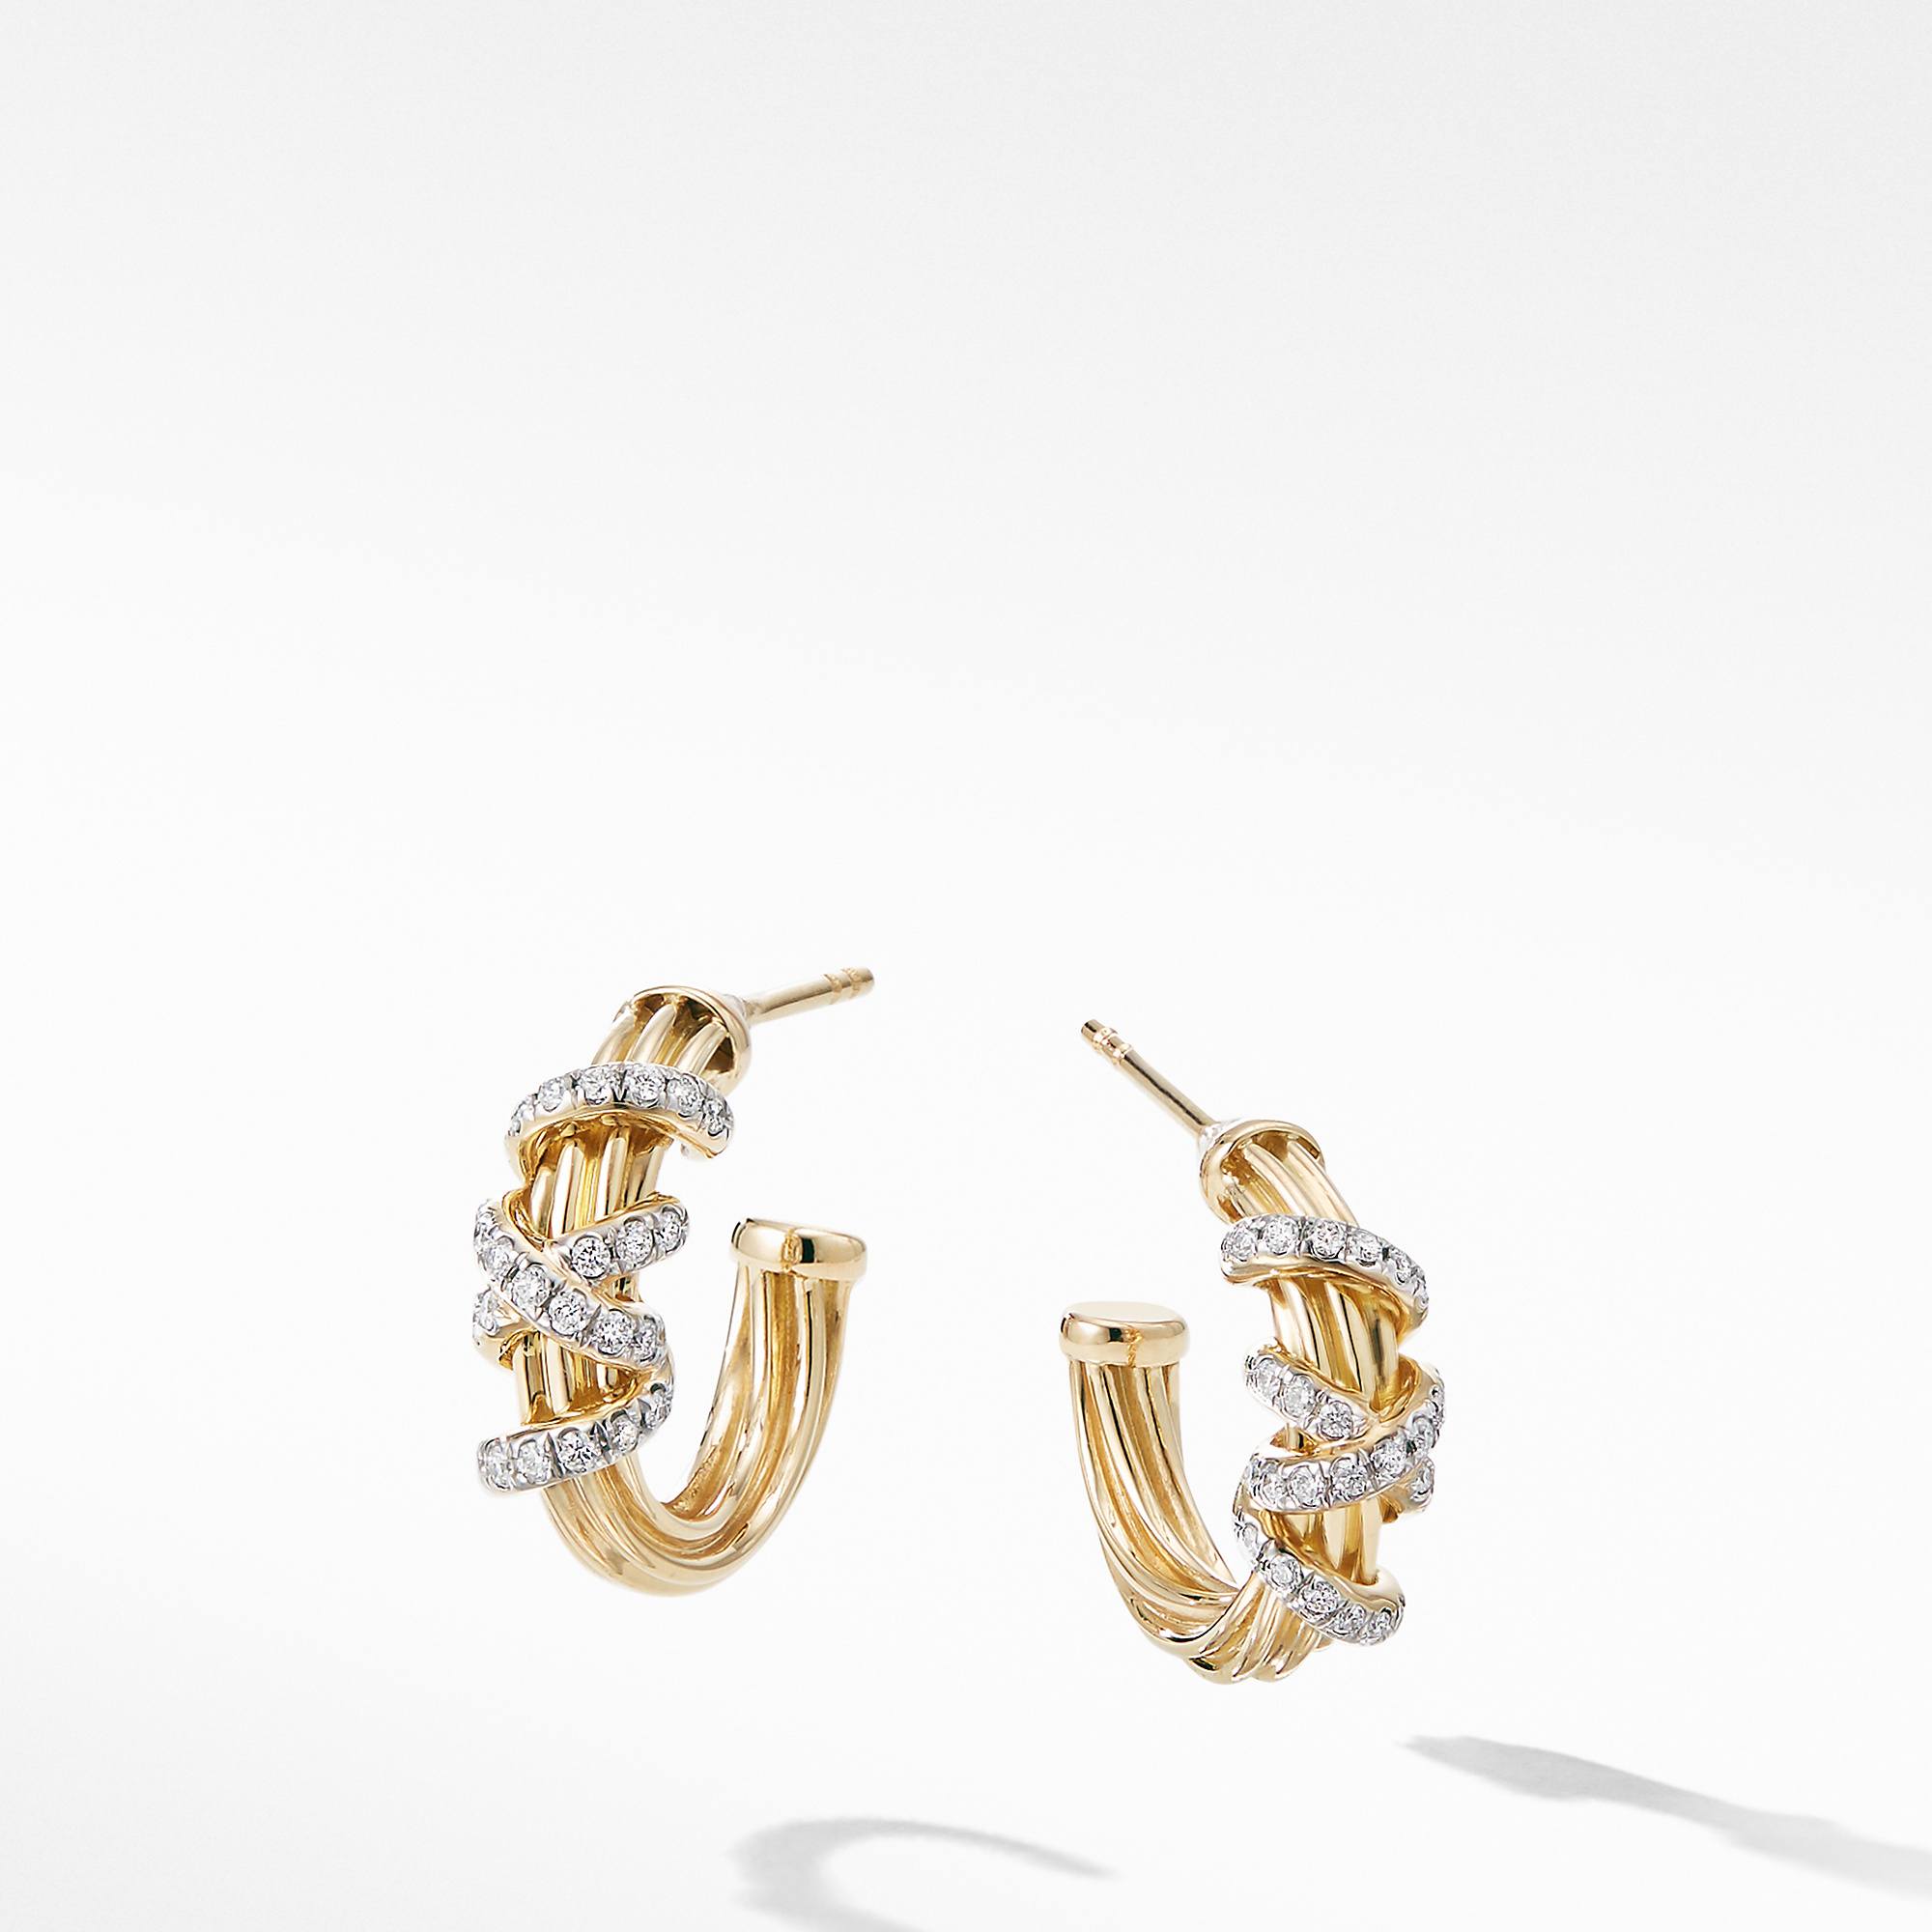 David Yurman Helena Small Hoop Earring in 18K Yellow Gold with Diamonds 0